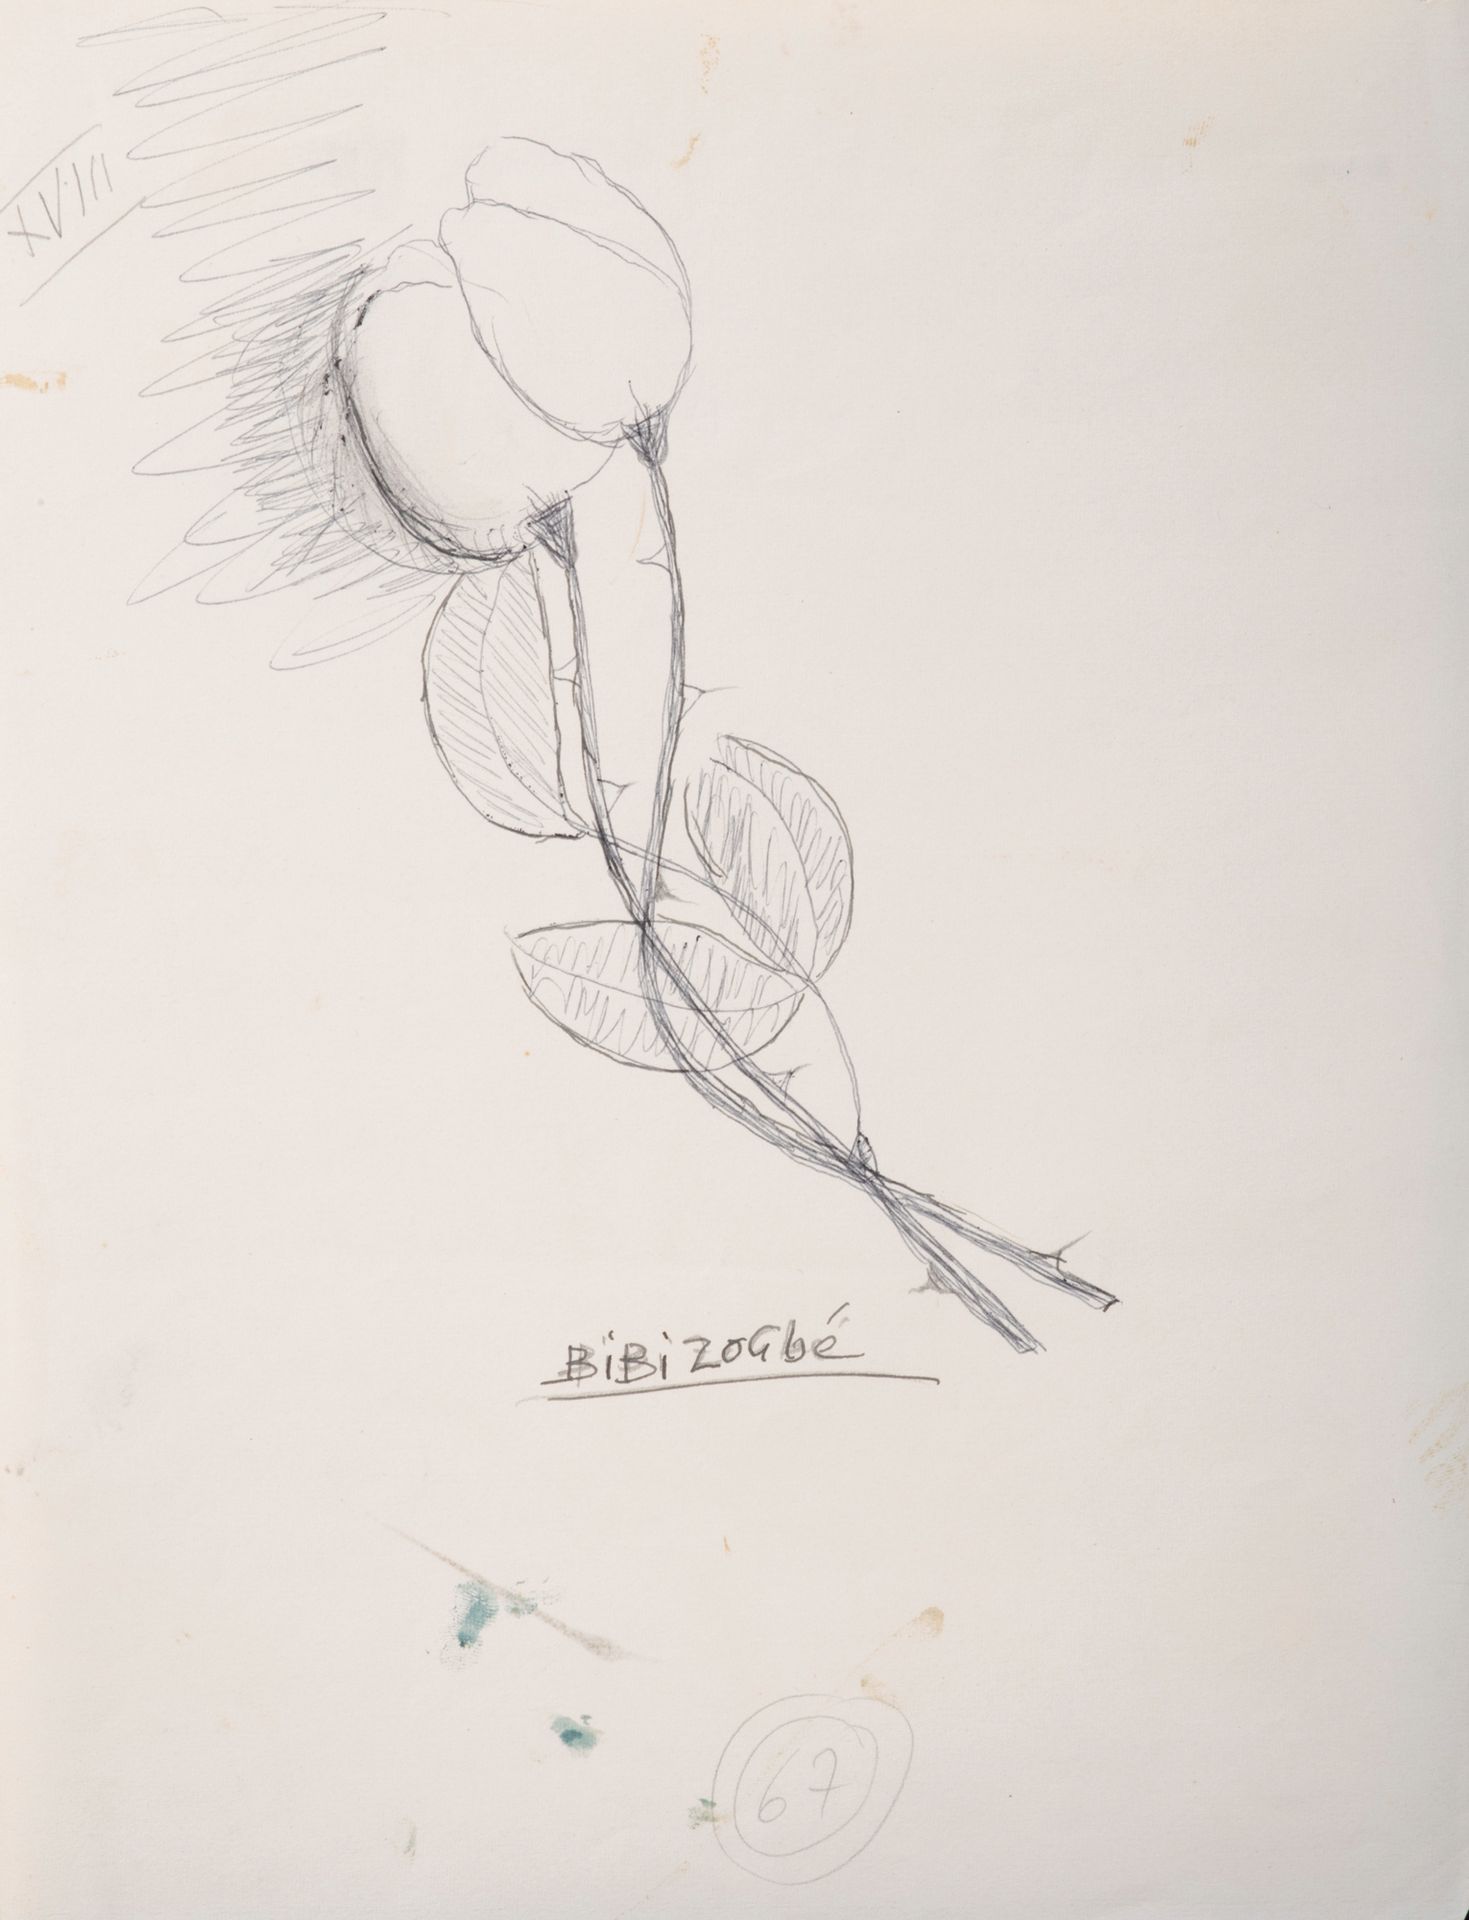 BIBI ZOGBE (1890-1973) 花
纸上铅笔，中下部有签名，有污点，有批注，30，5 x 23厘米